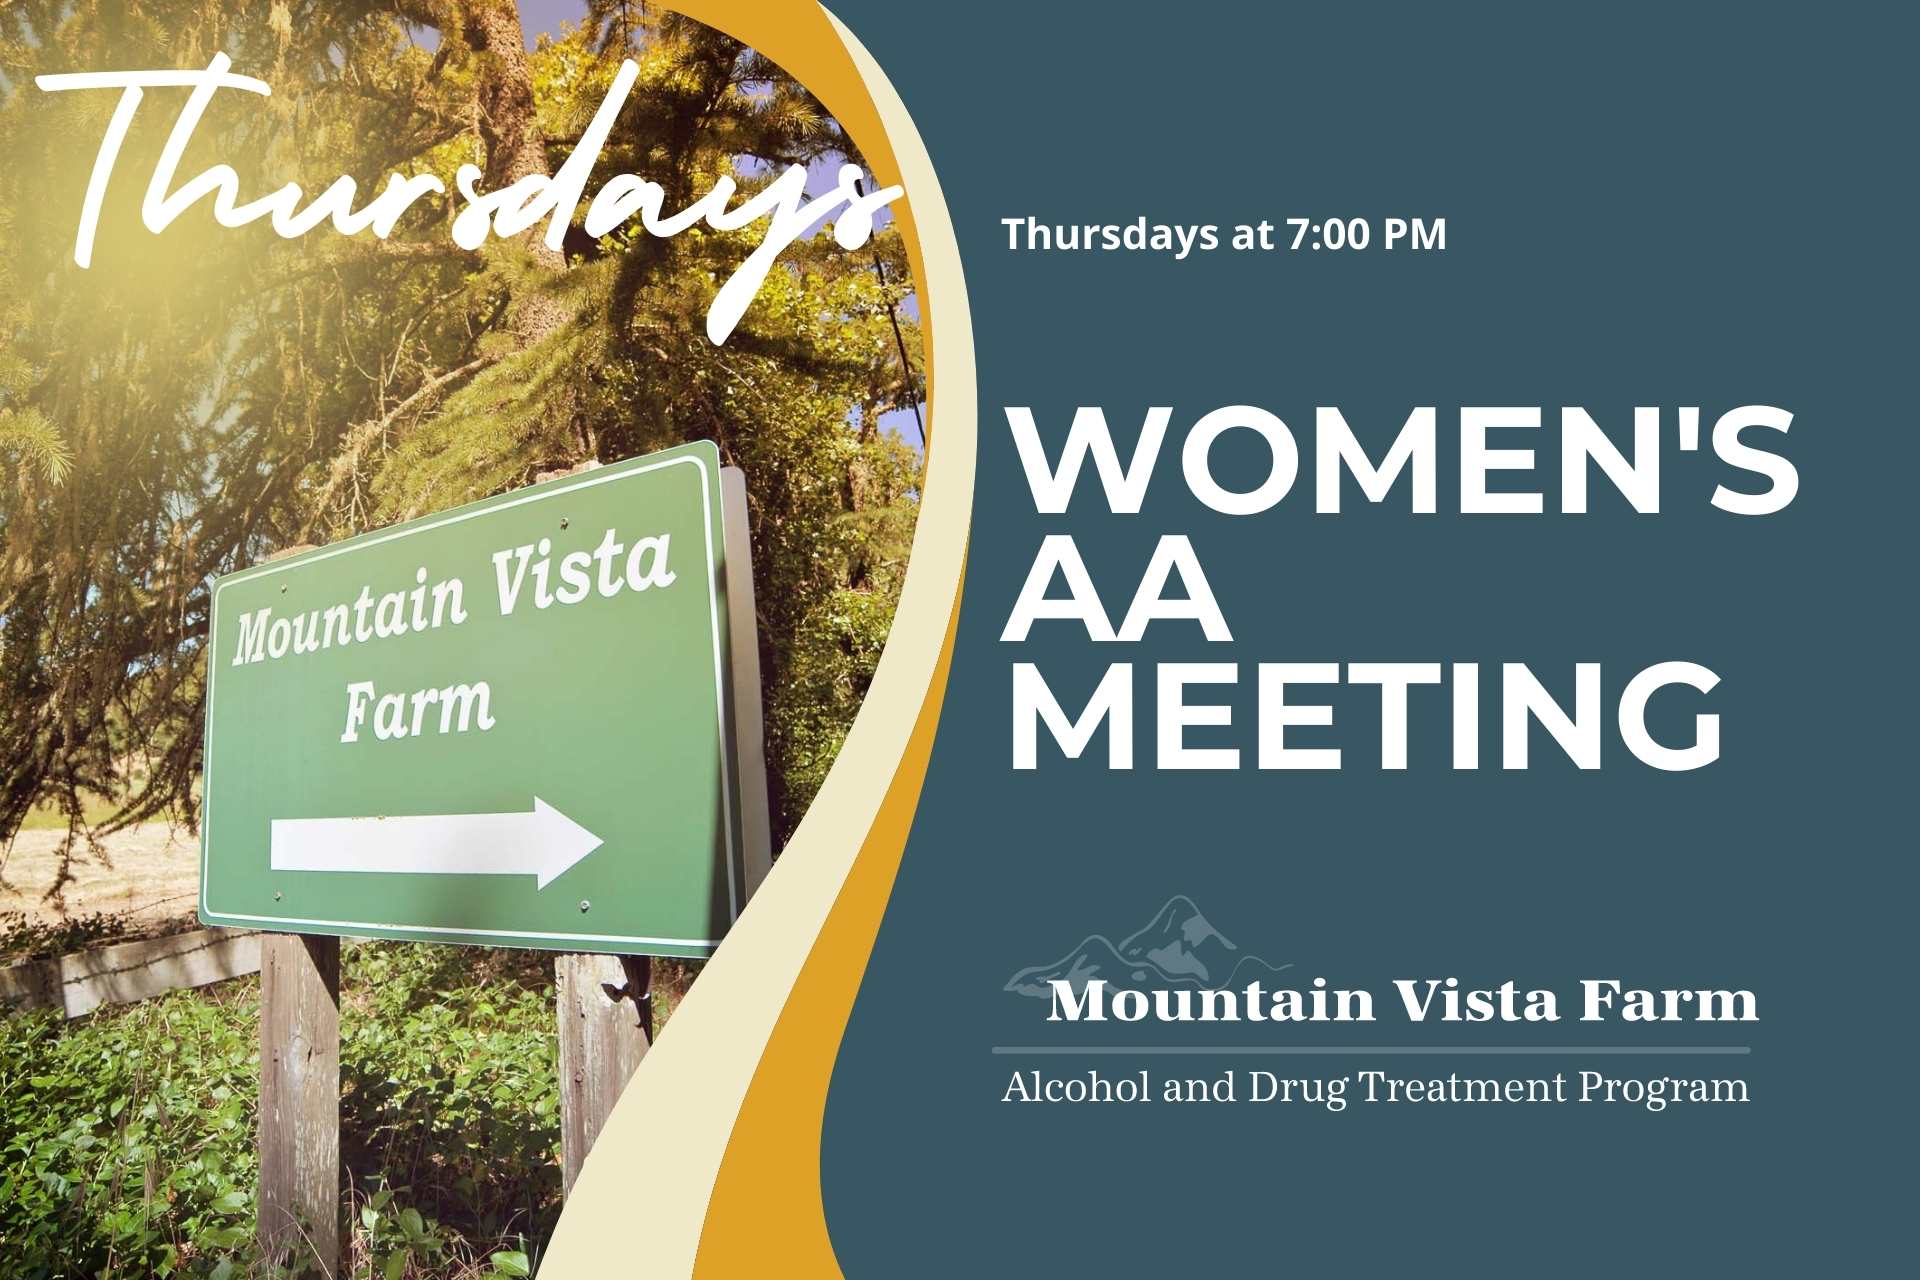 Women’s AA Meeting Thursdays at 7:00 PM